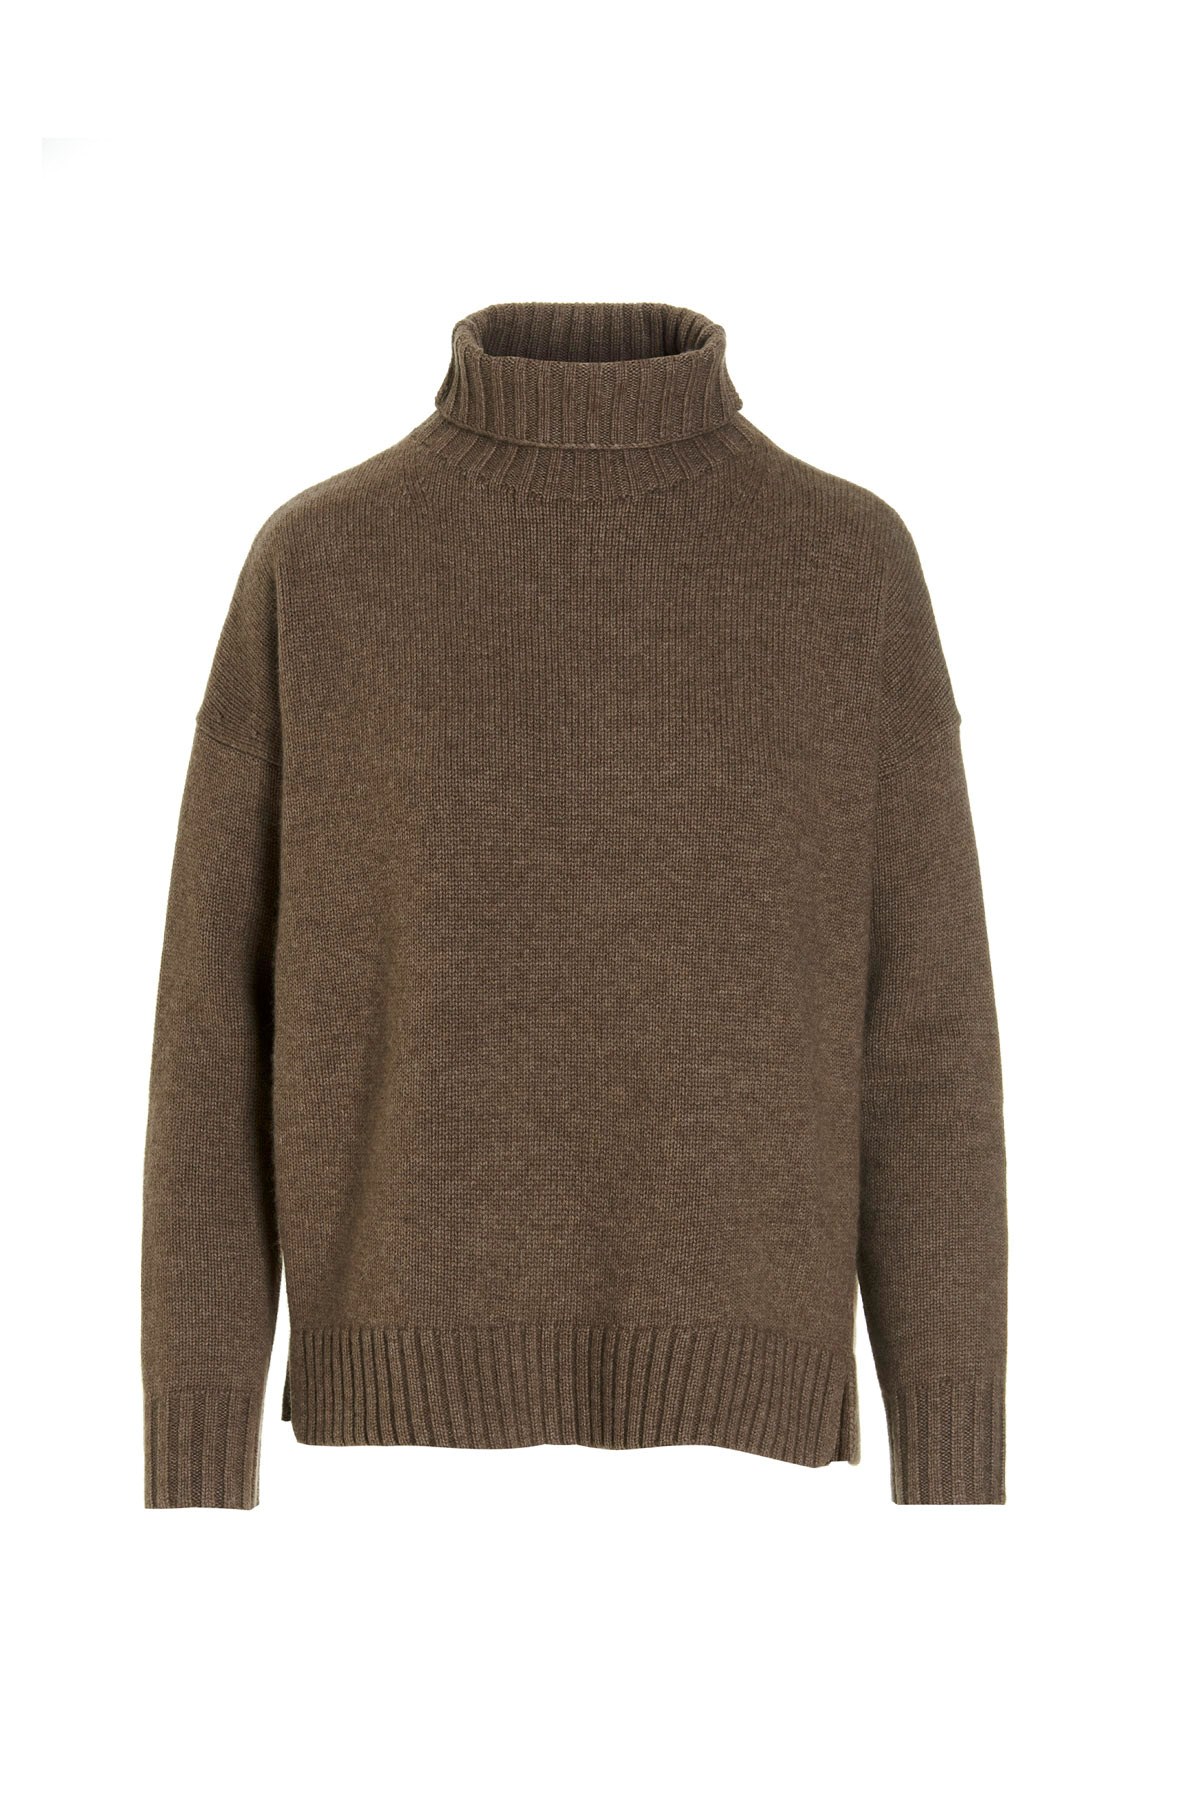 MAX MARA 'Trau' Sweater